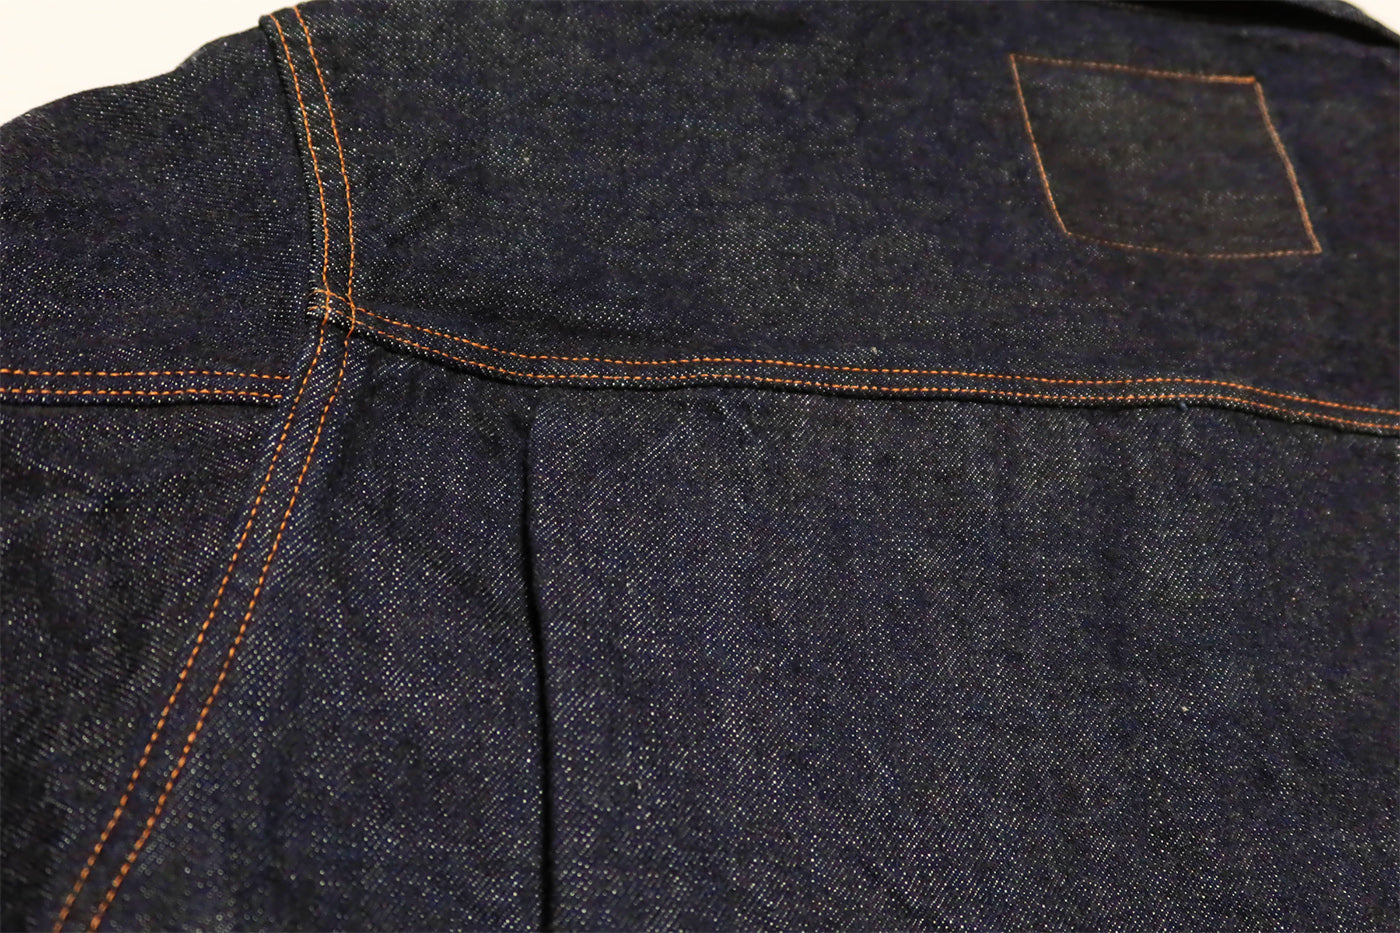 Pherrow's Denim Jacket 510SW 13.5oz. Men's Denim Blouse Jeans Made in Japan